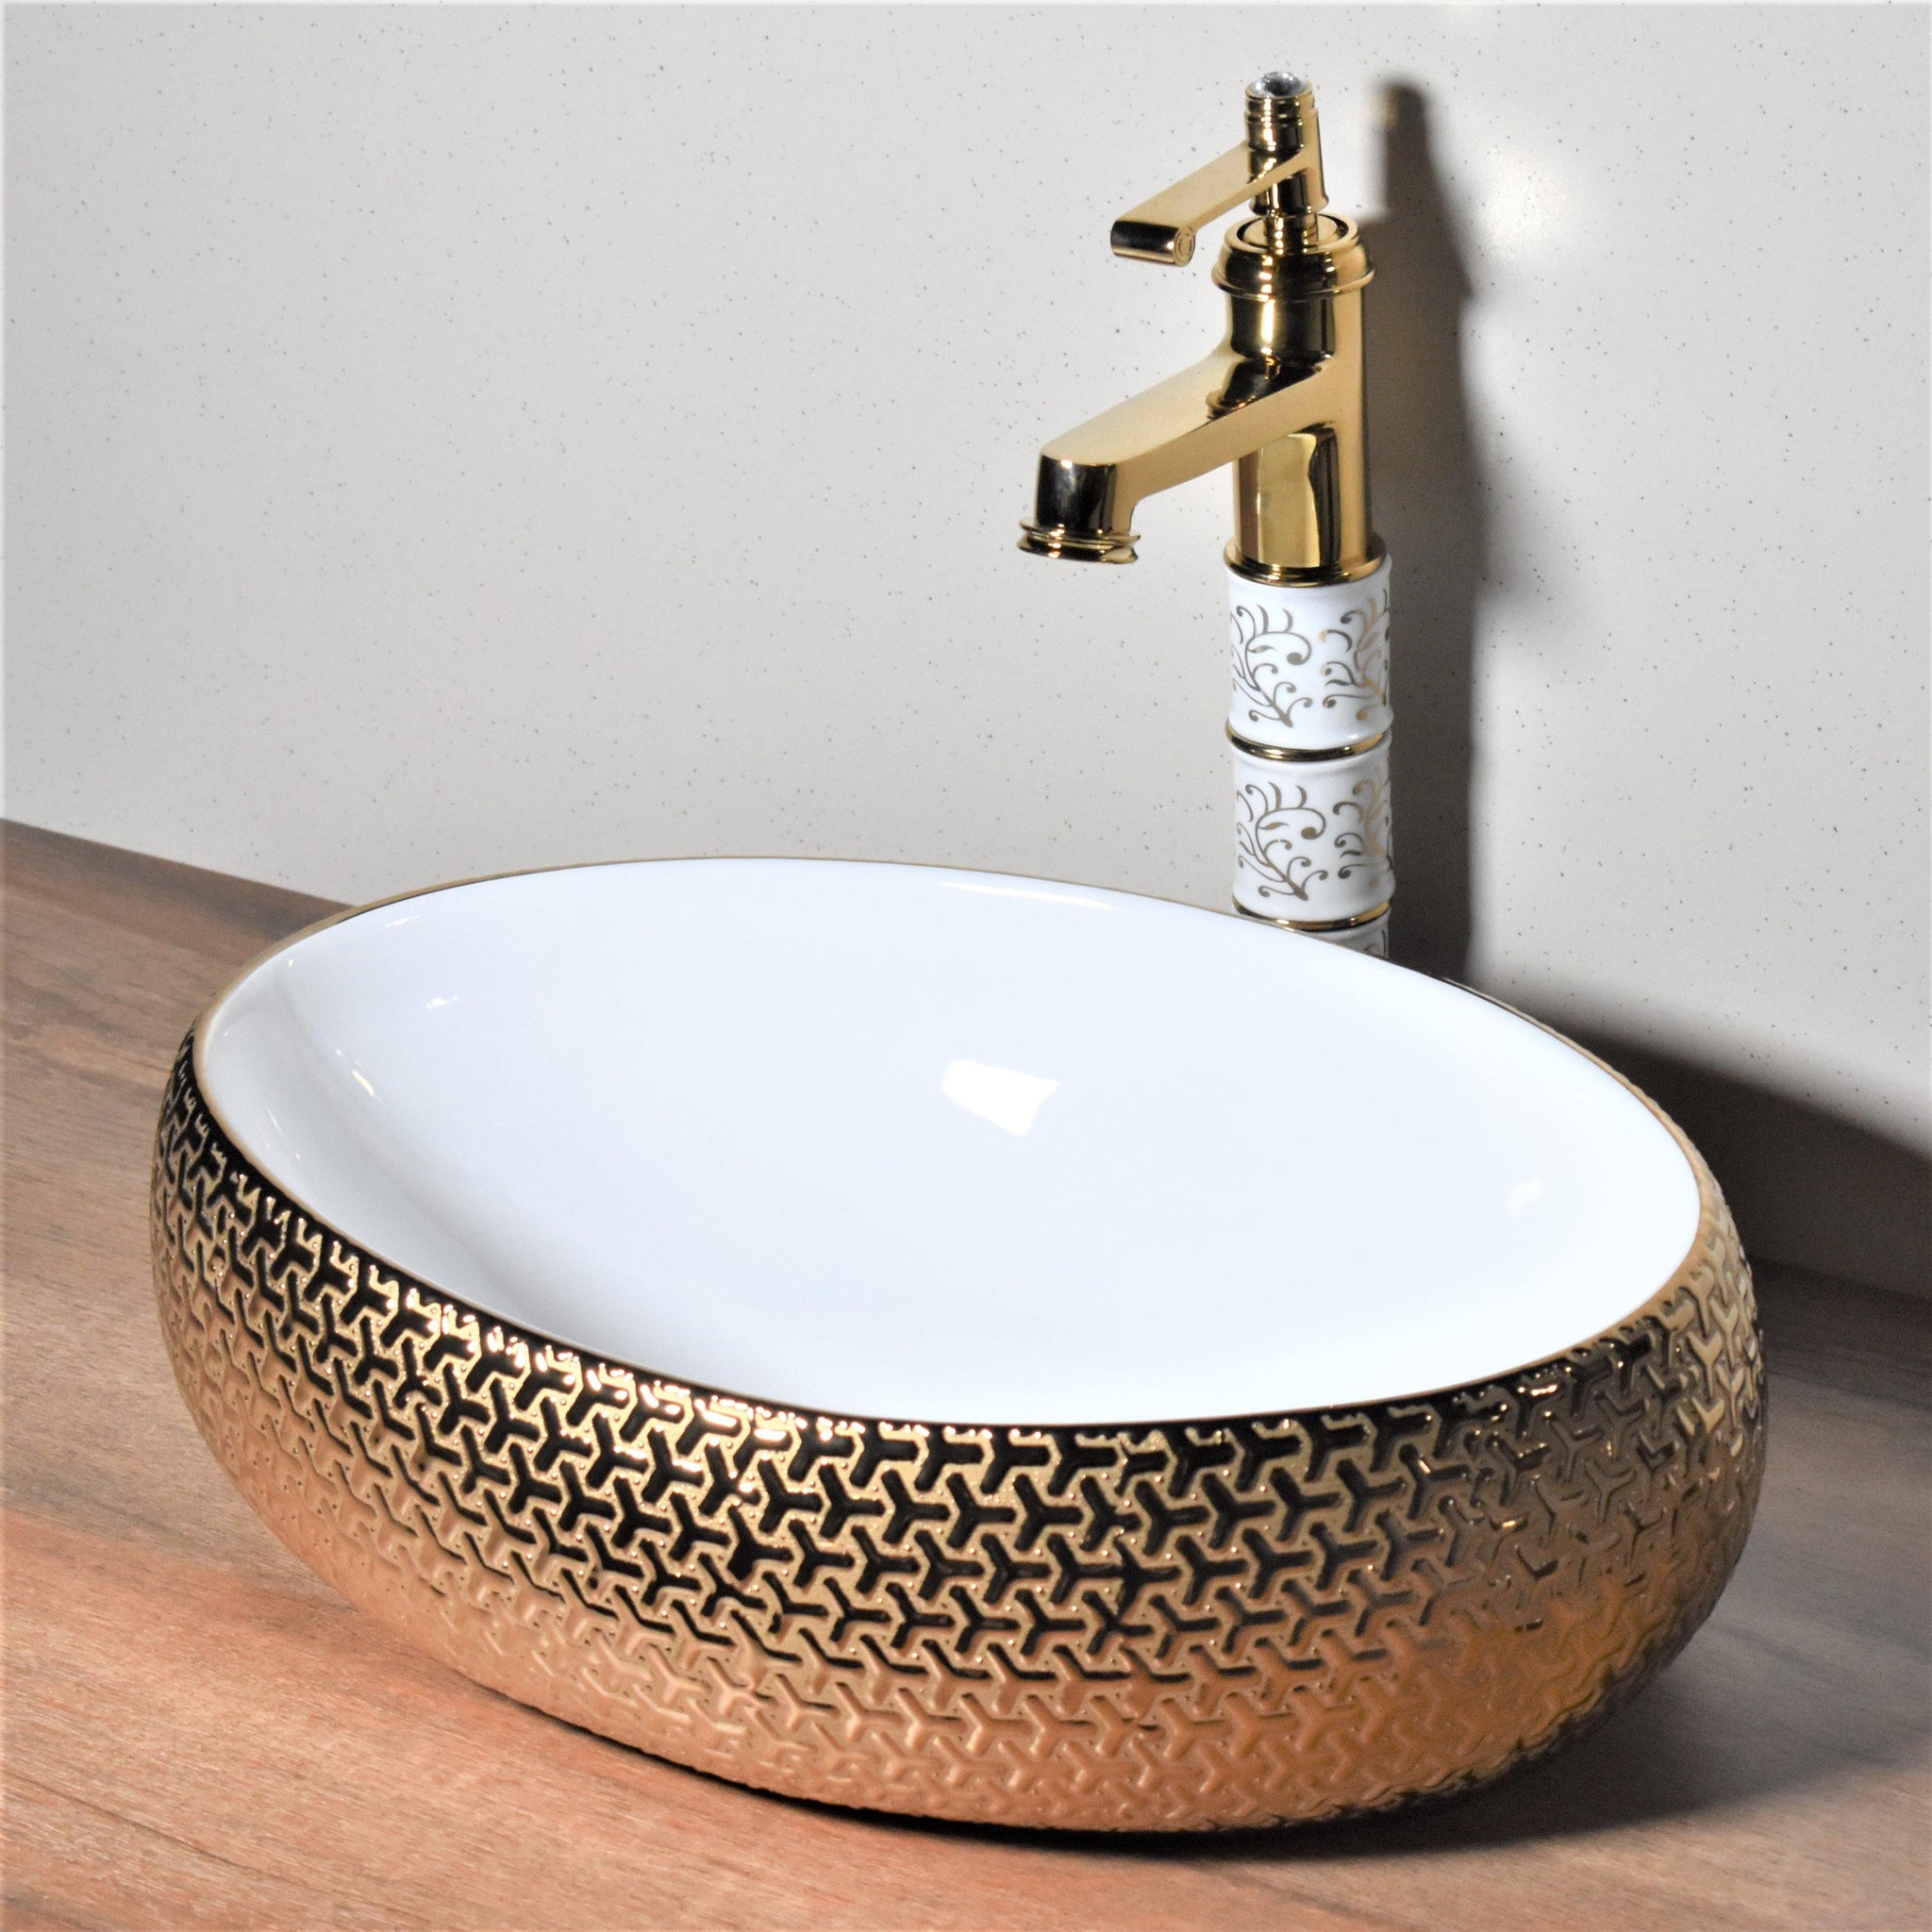 Ceramic Premium Designer Oval Shape Table Top Over Counter Vessel Sink Wash Basin for Bathroom 18 X 13 X 5.5 Inch Gold White Basin For Bathroom - Bath Outlet